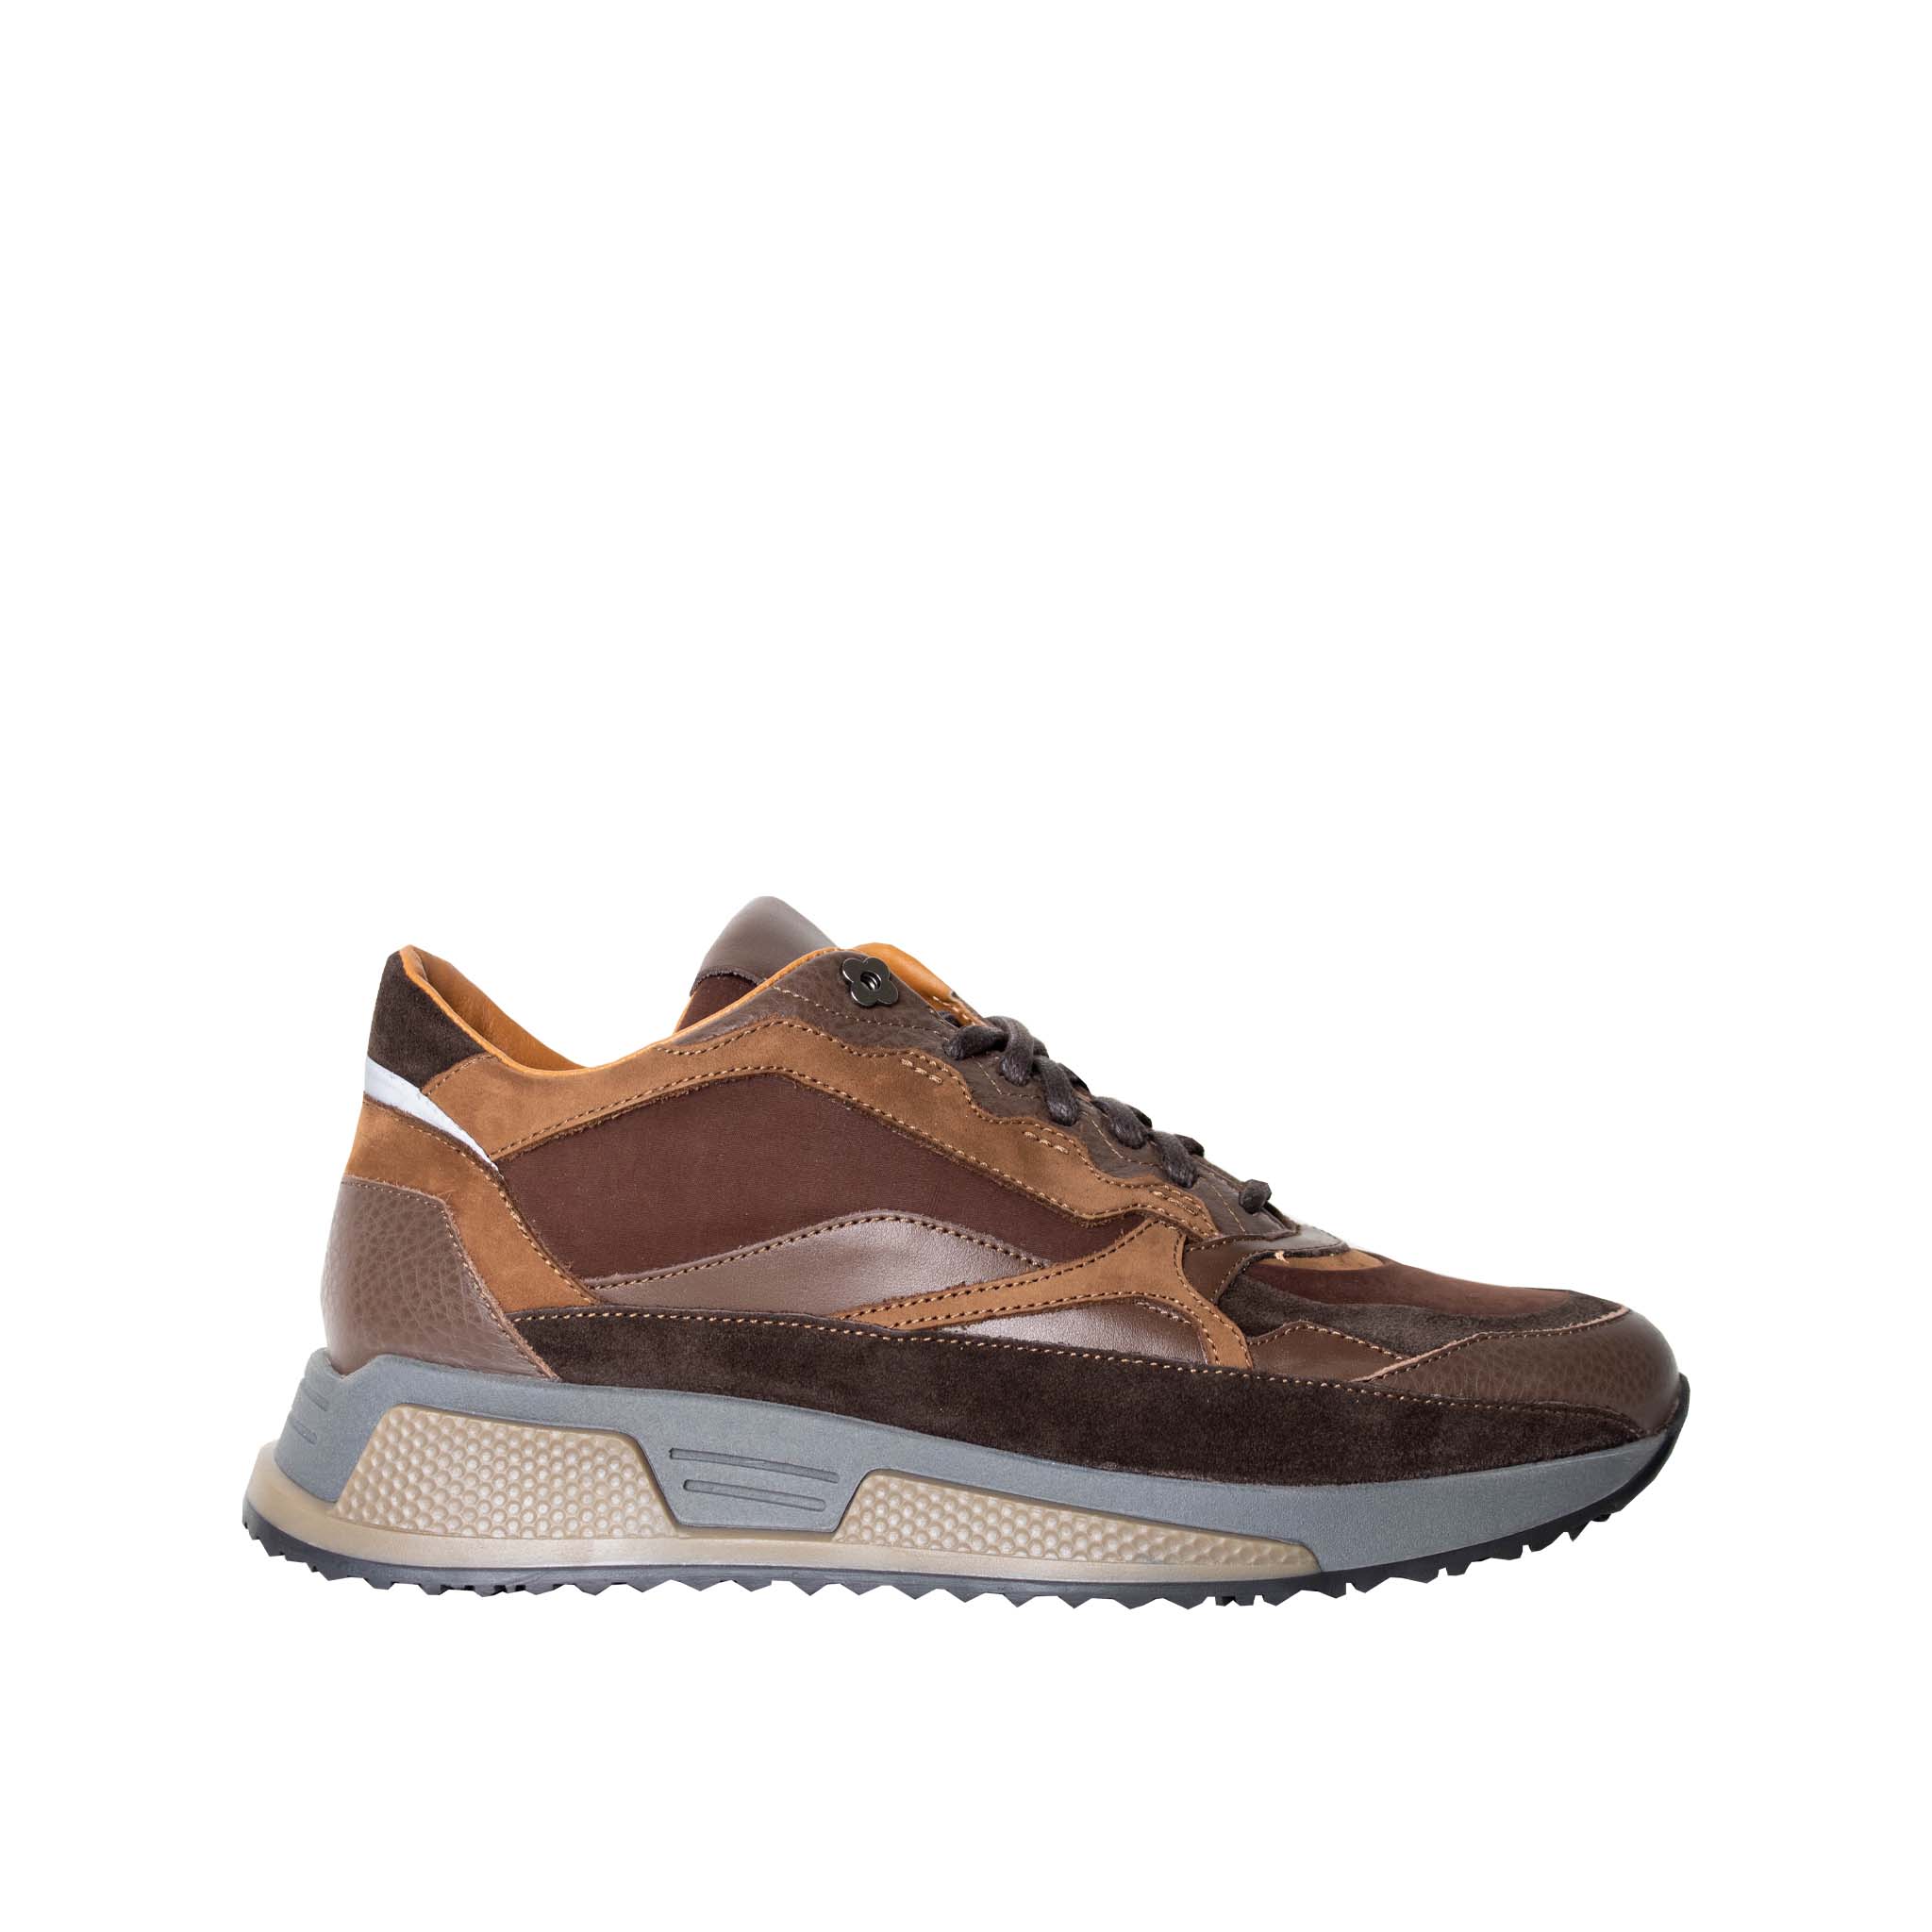 Lardini Brown leather and suede Sneakers - Fizigo